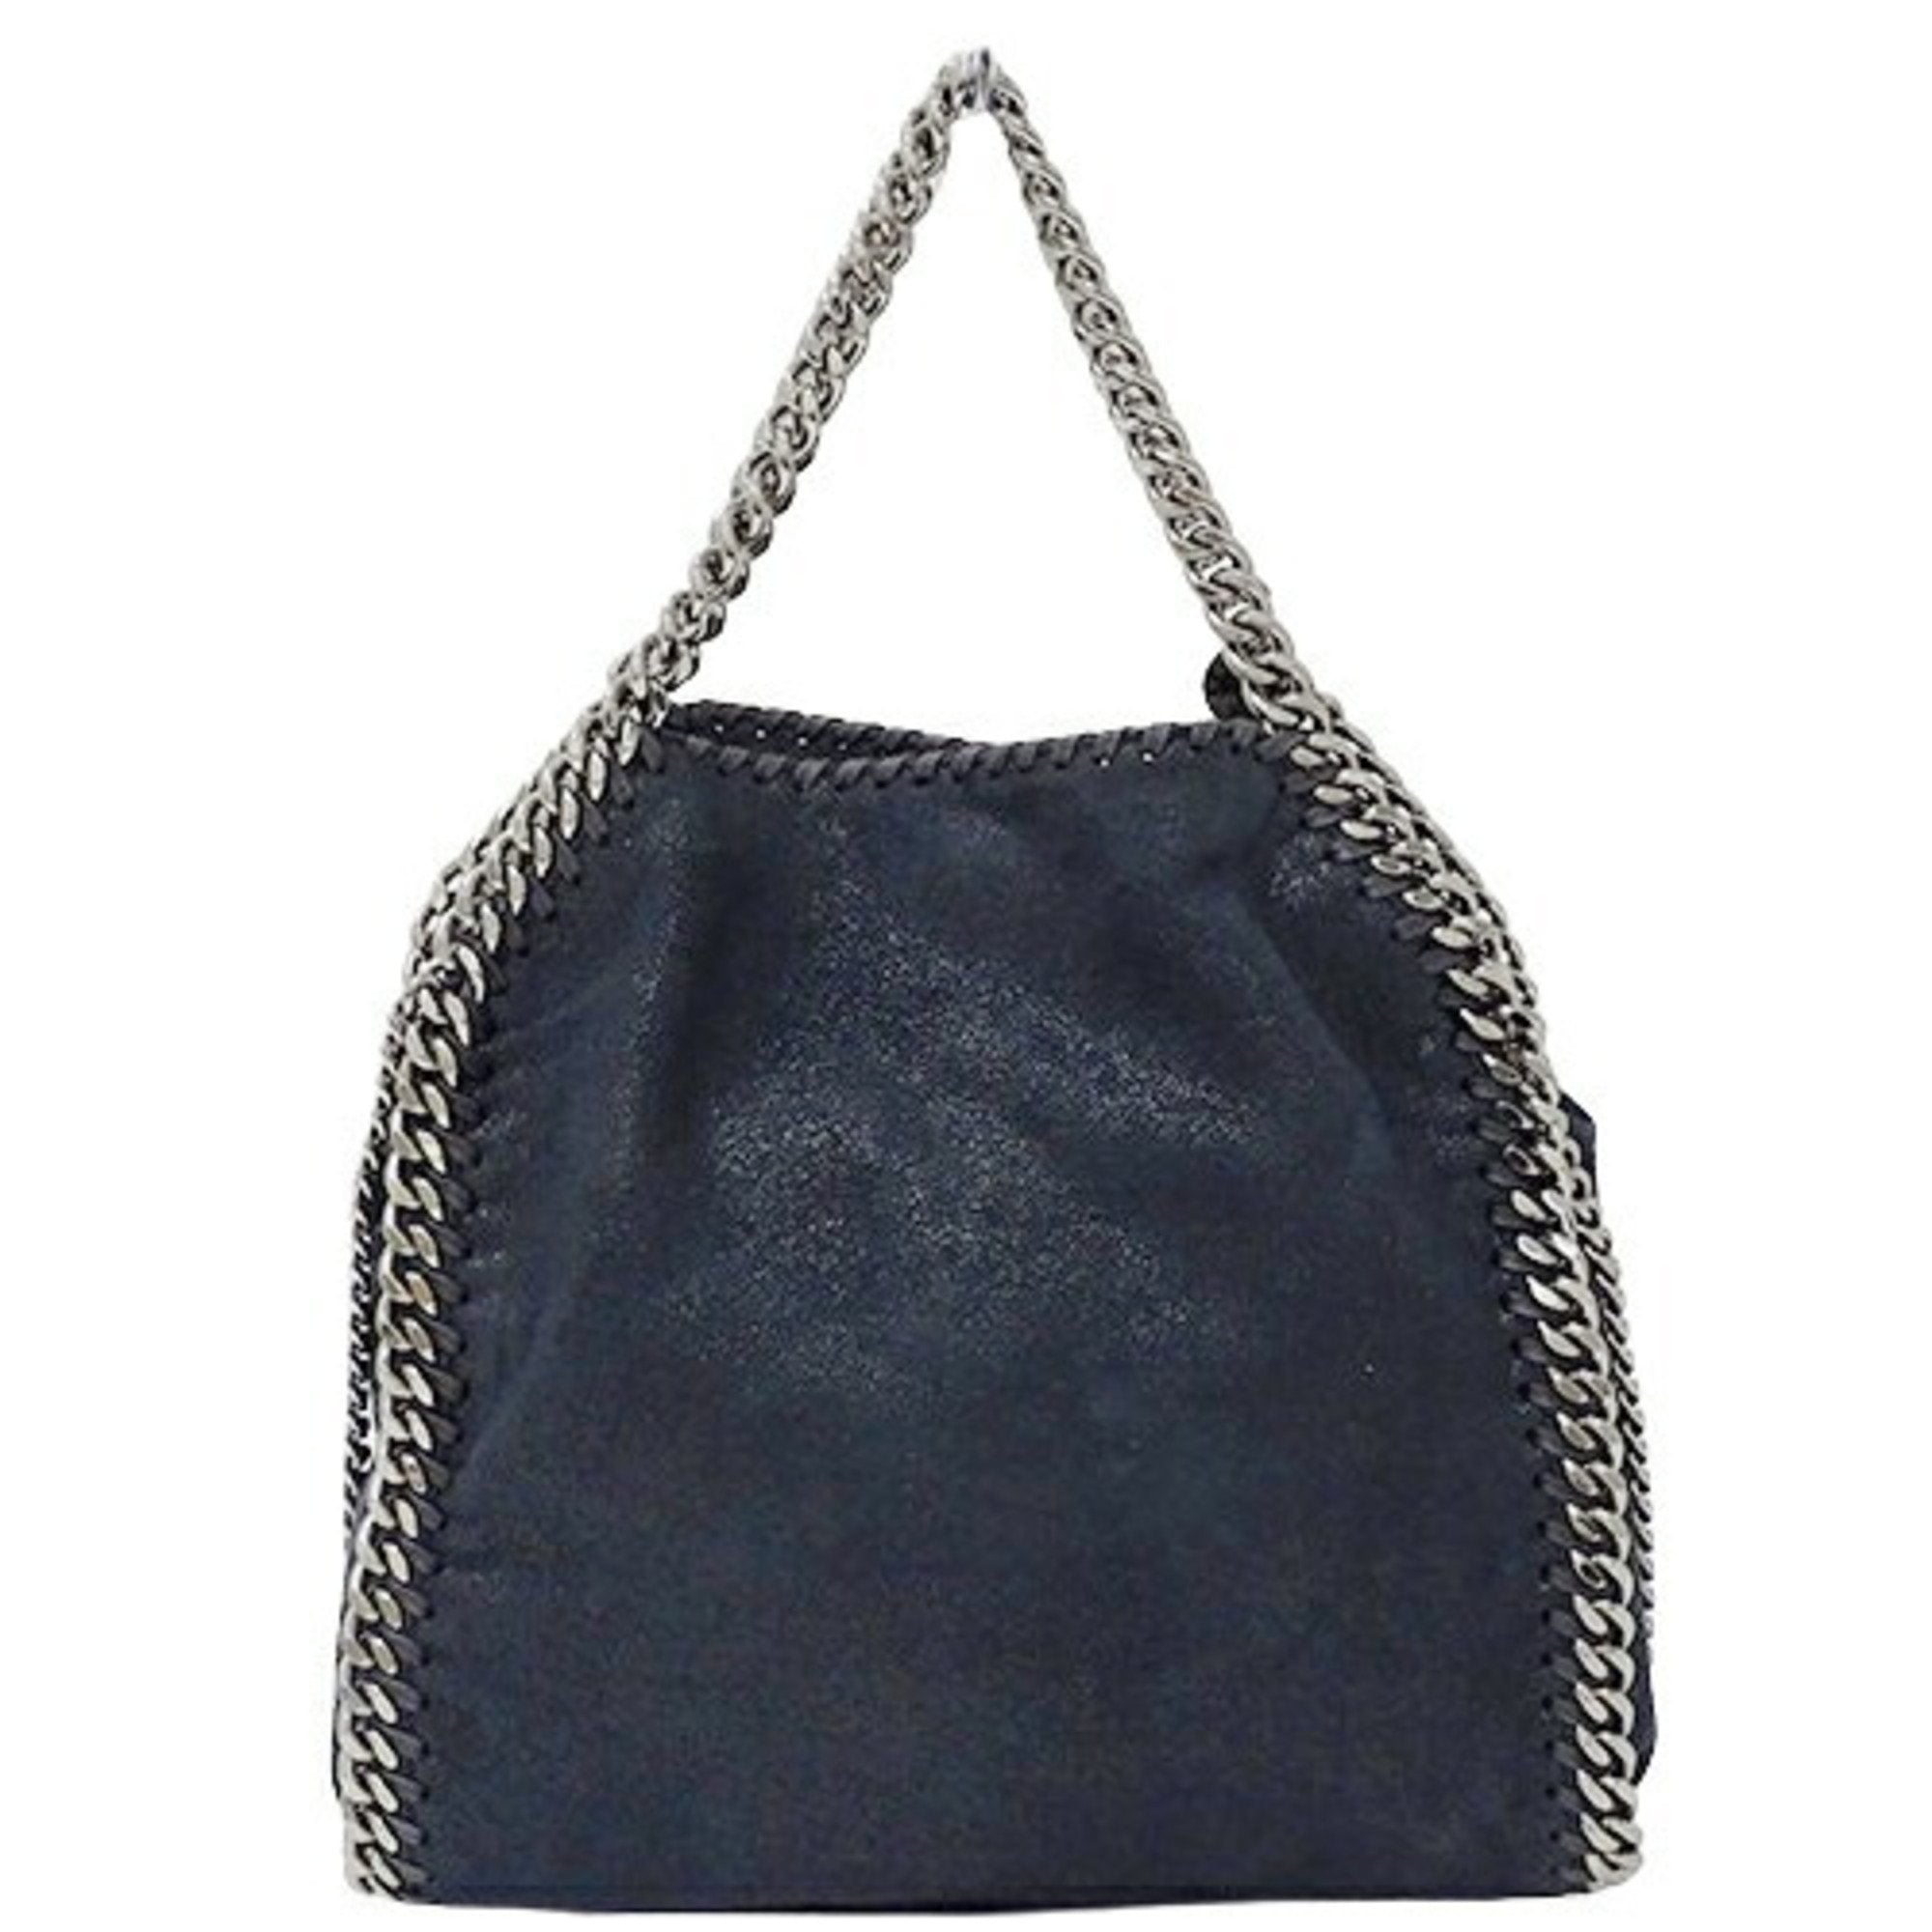 Bags Women's Handbags Tote Shoulder 2way Falabella Navy Blue Chain Compact